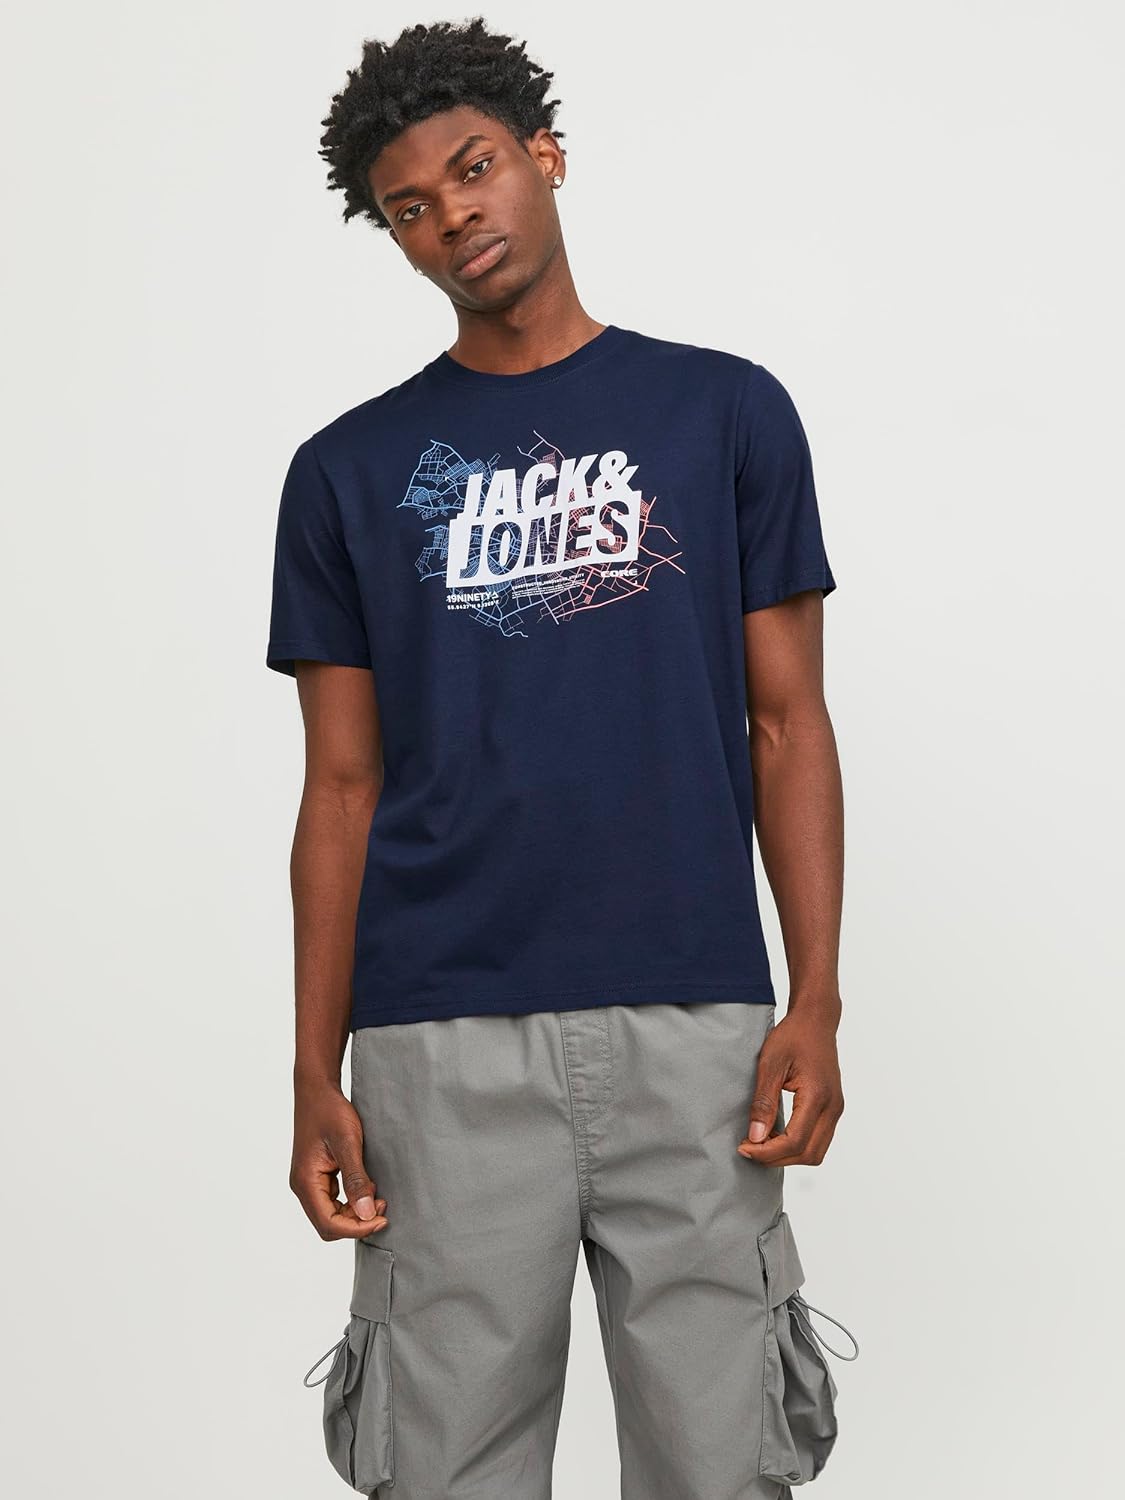 JACK & JONES mens MAP T-Shirt